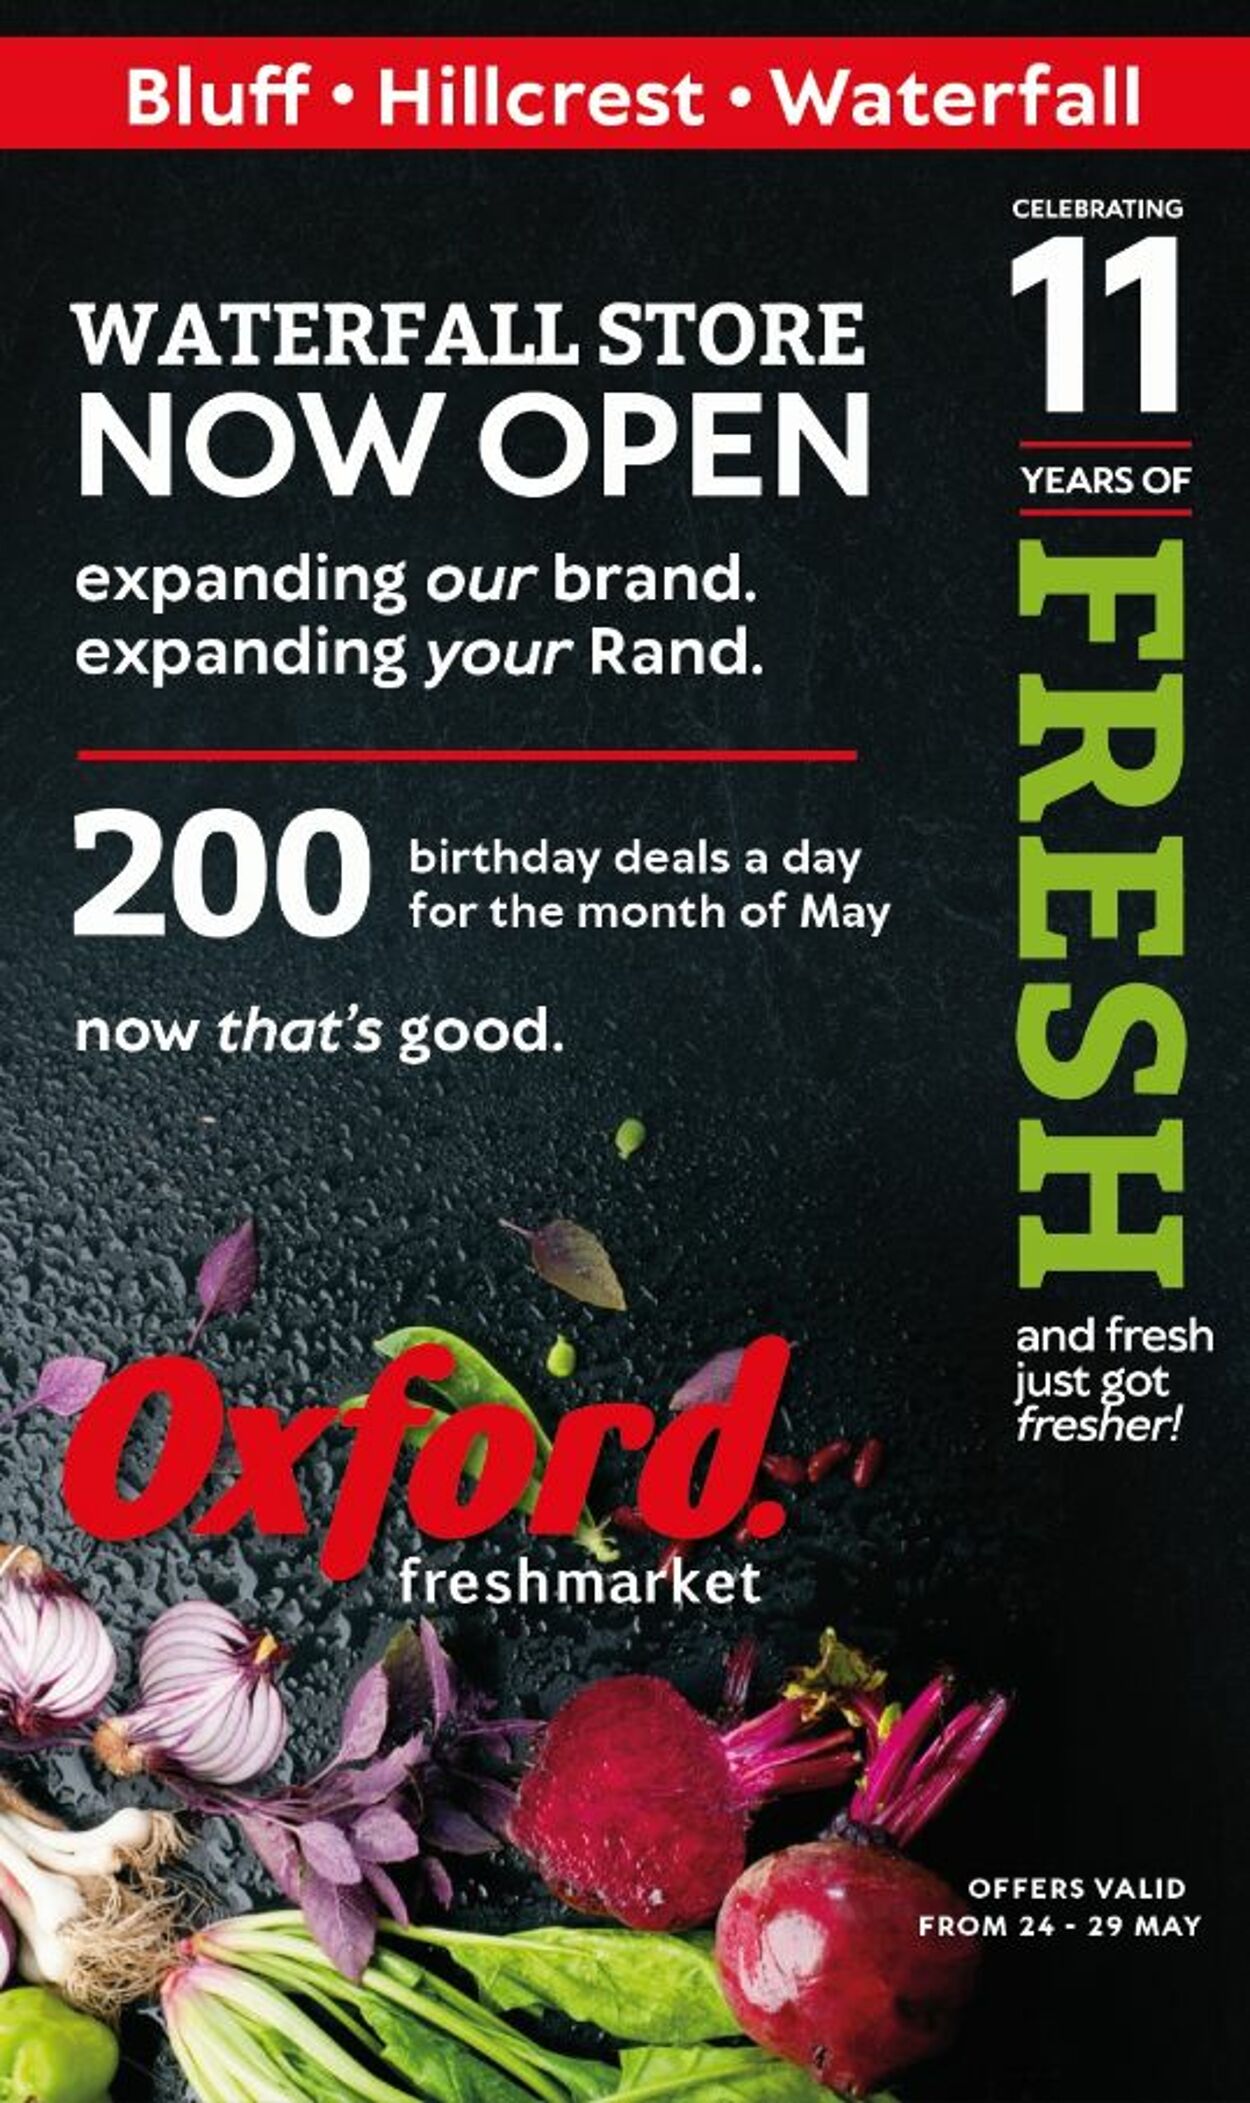 Oxford Freshmarket Promotional specials